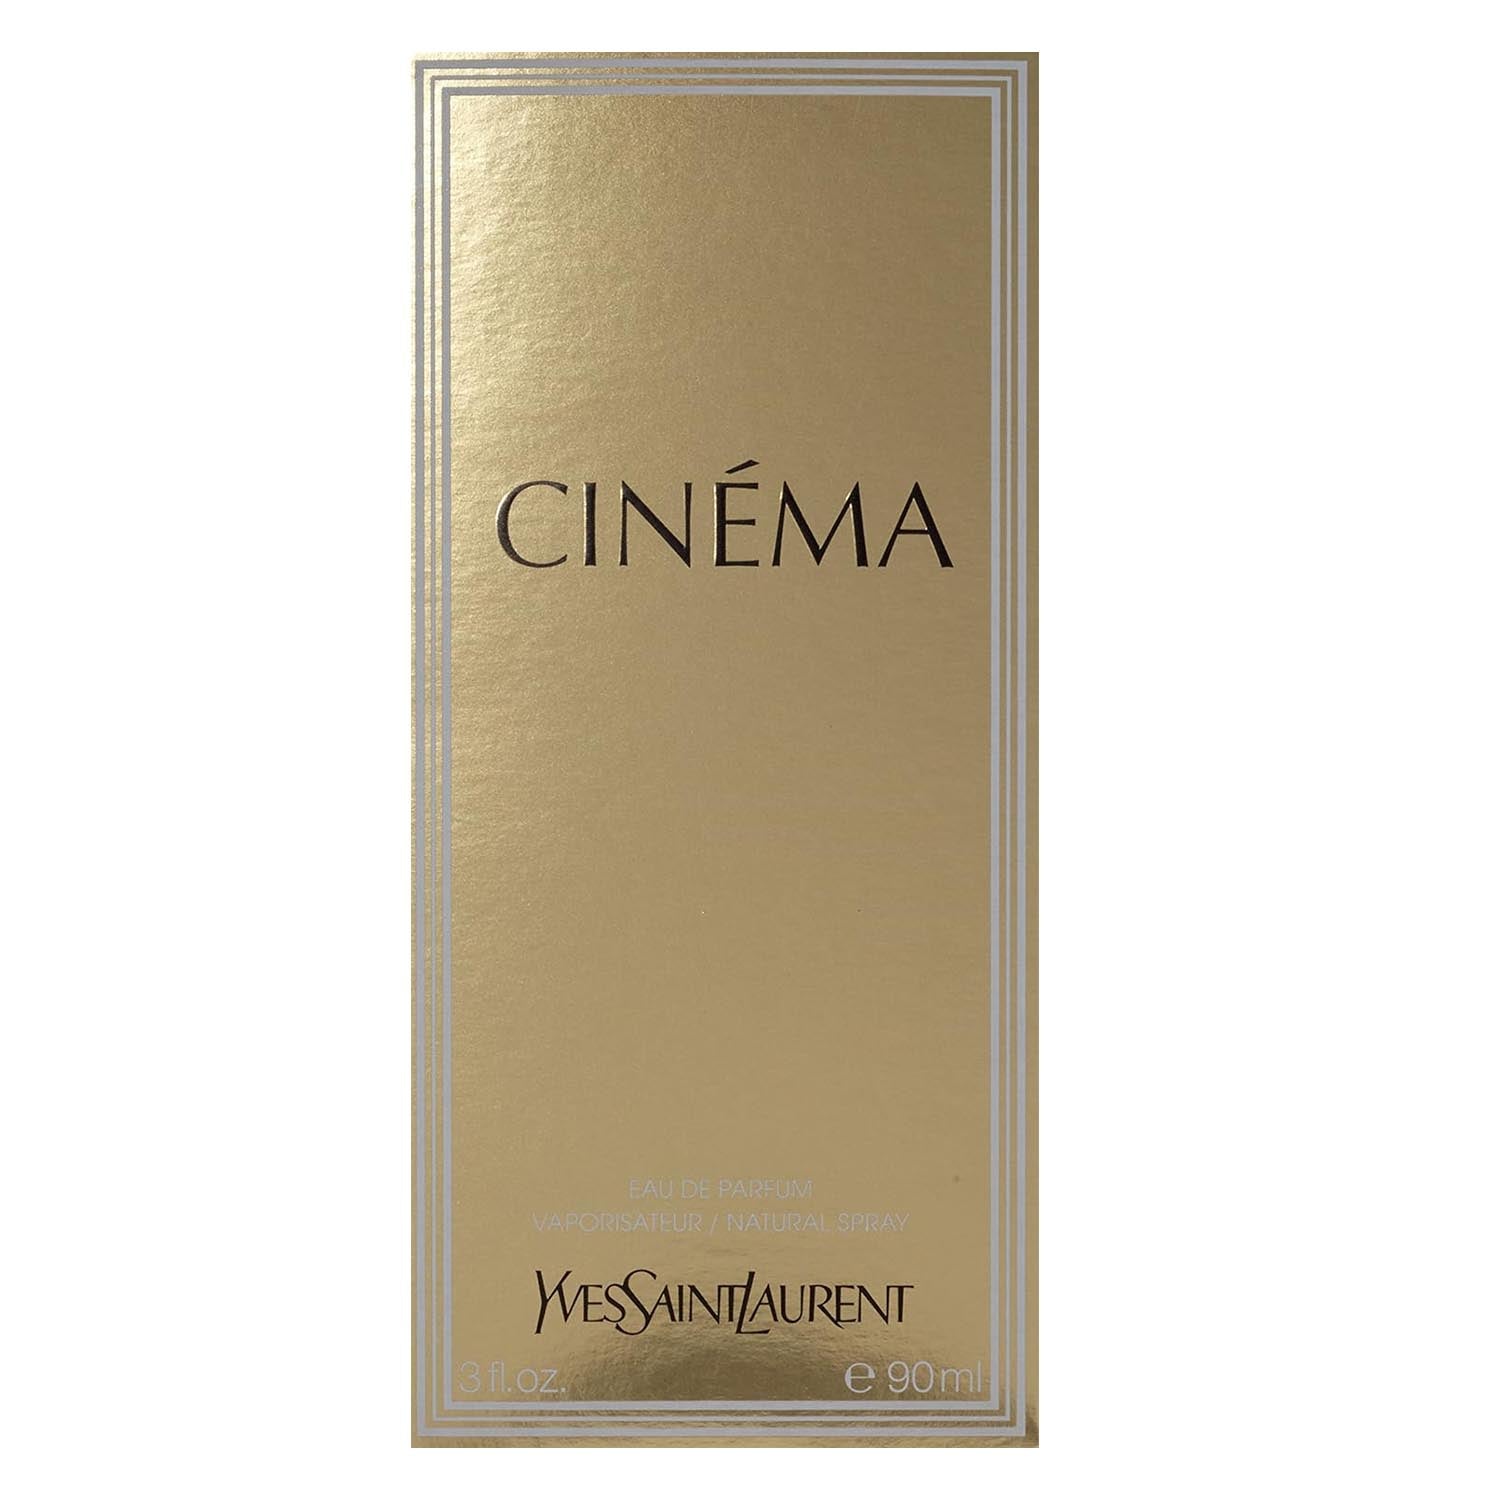 Yves Saint Laurent Cinema Eau De Perfume Spray for Women